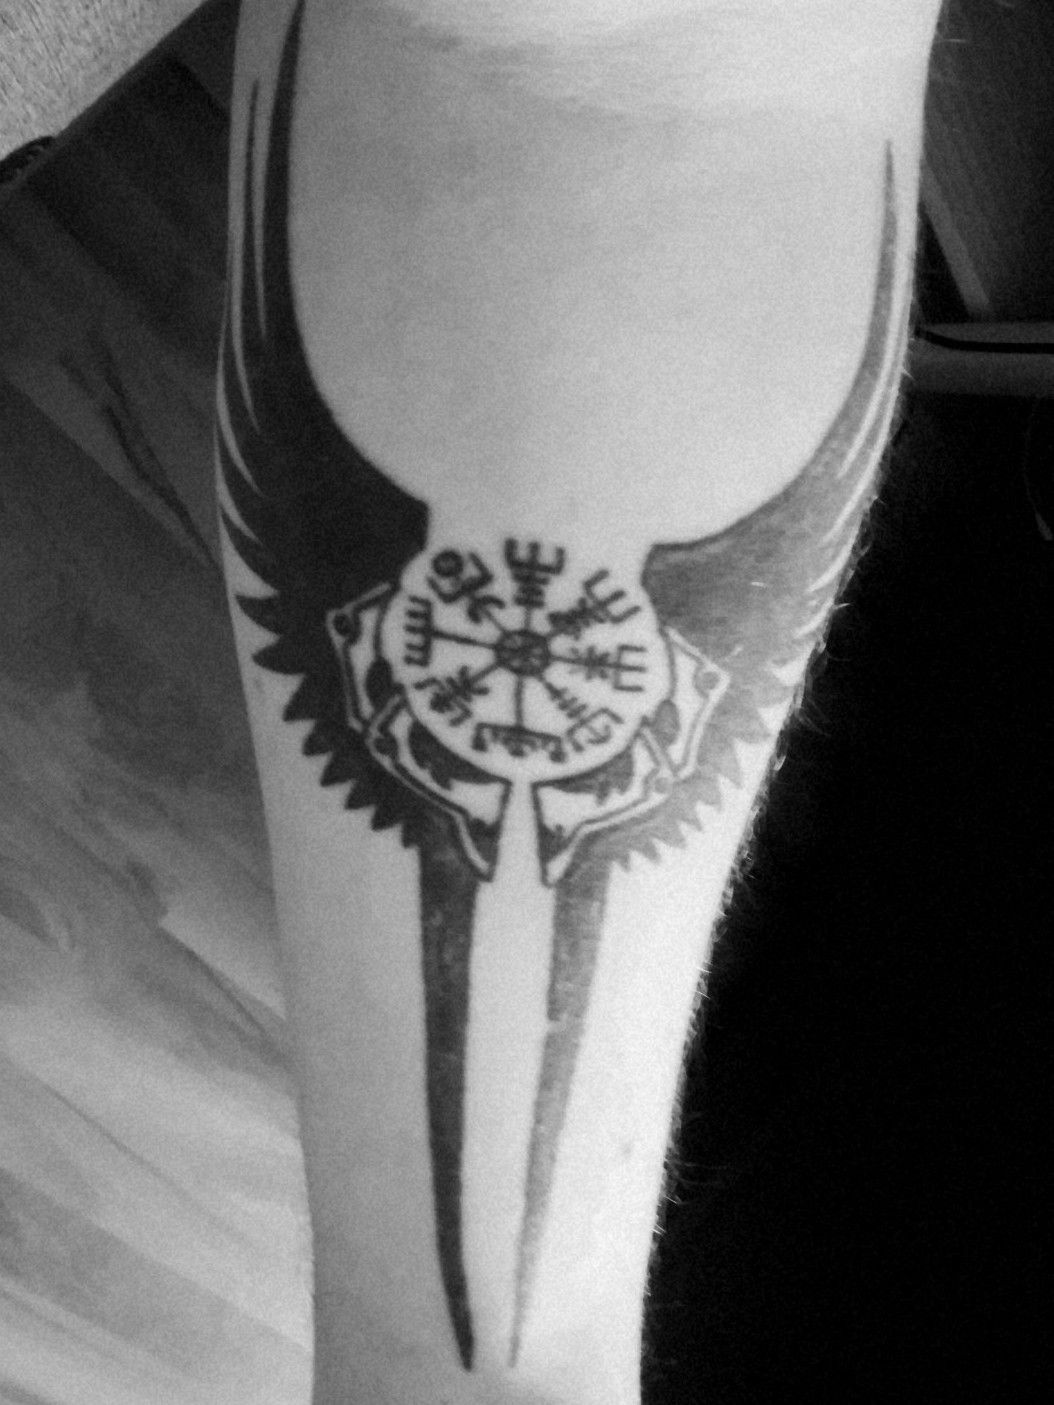 valkyrie wing tattoo designs